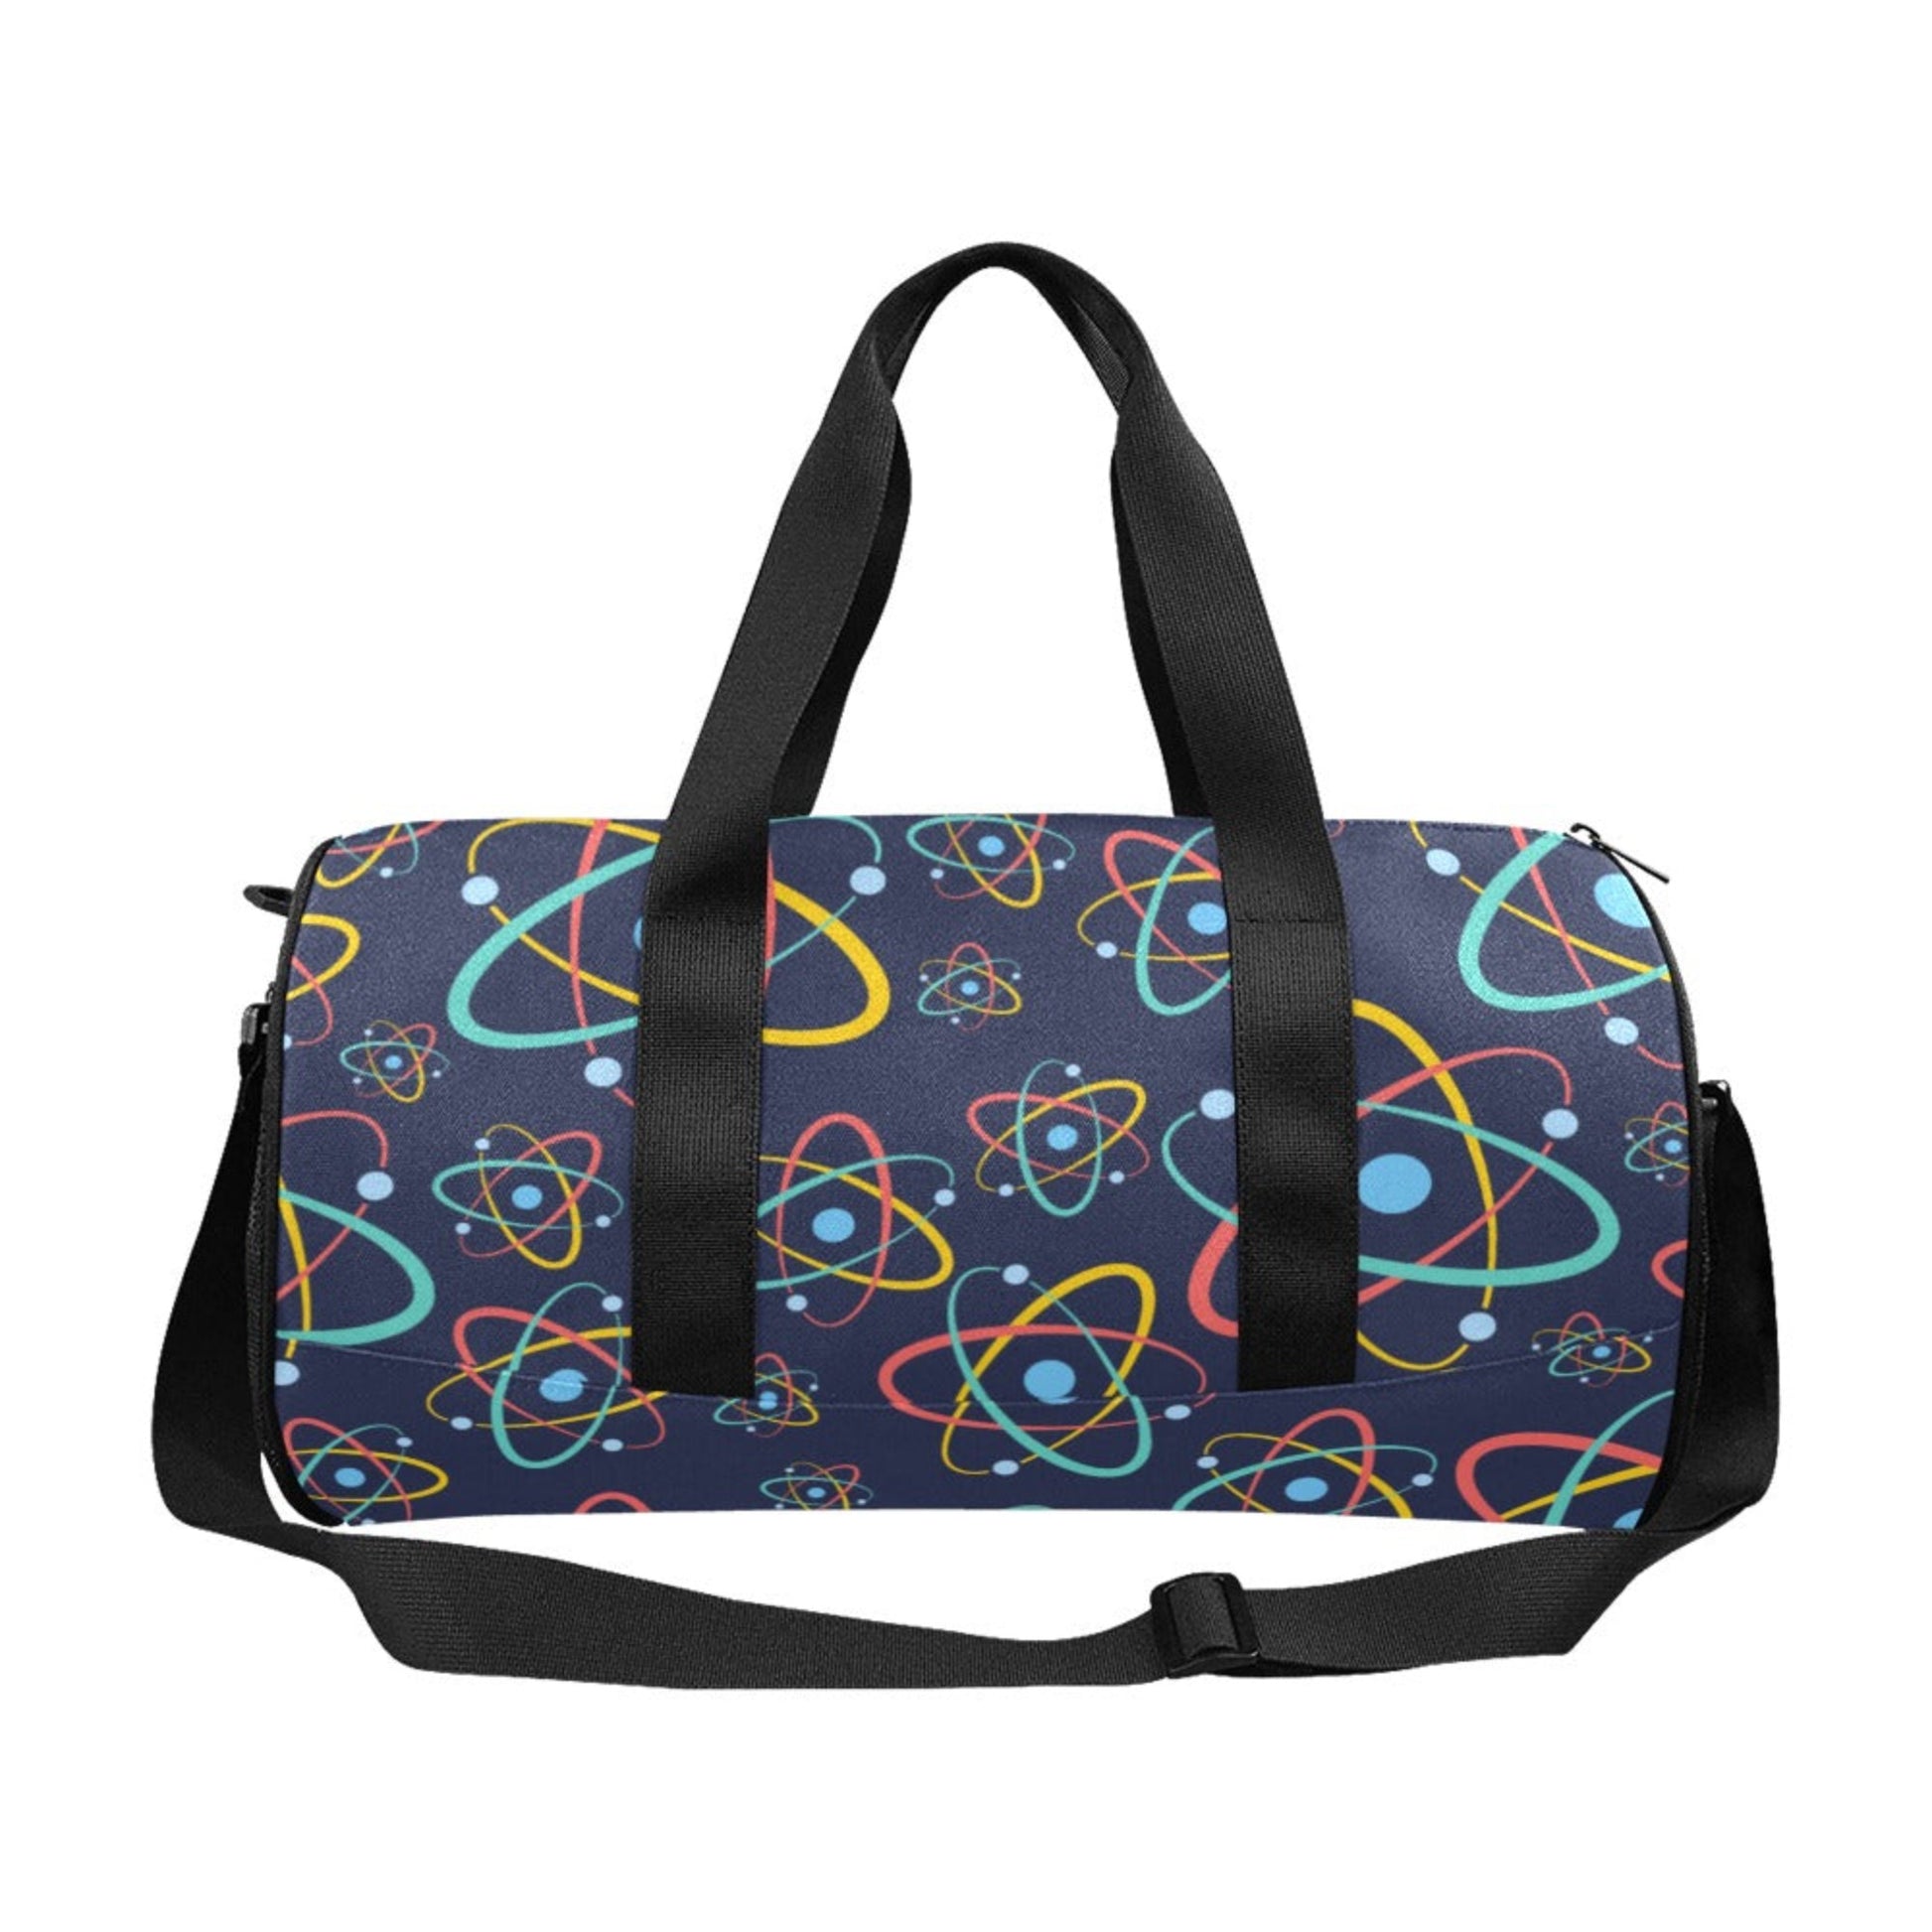 Atoms - Round Duffle Bag Round Duffle Bag